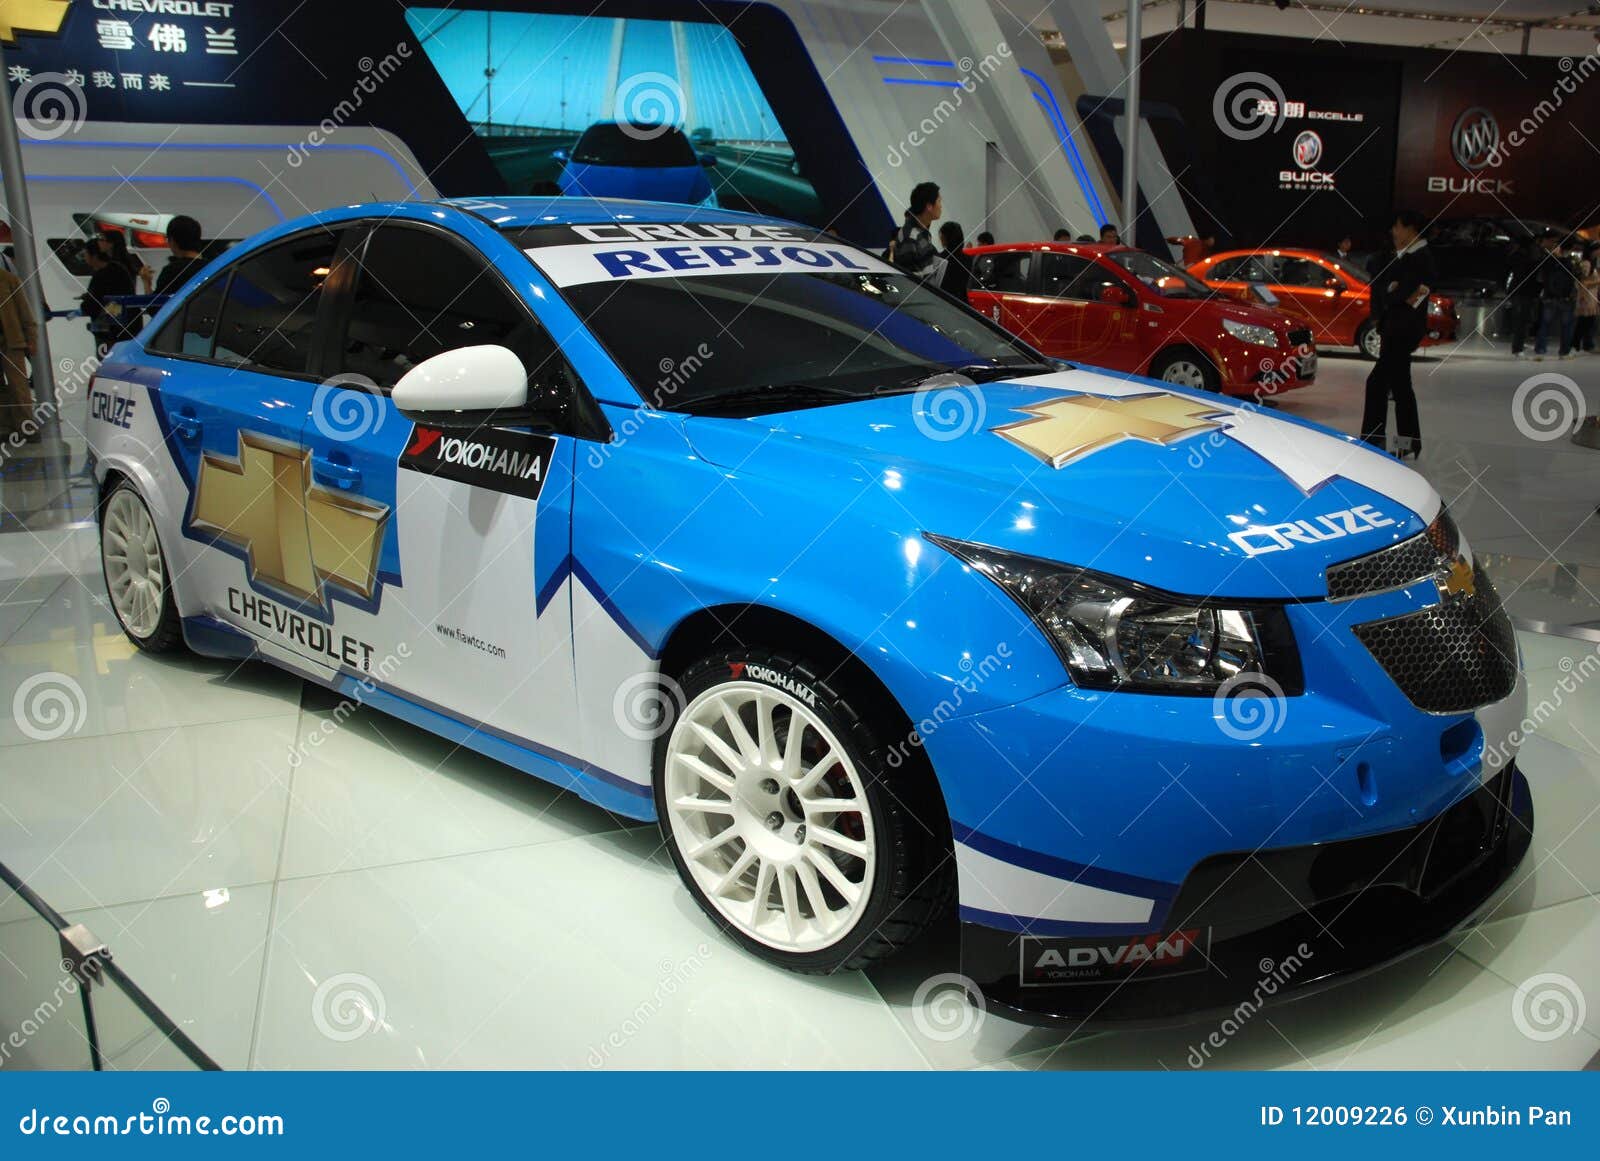 China International Automobile Exhibition Chevrole ...